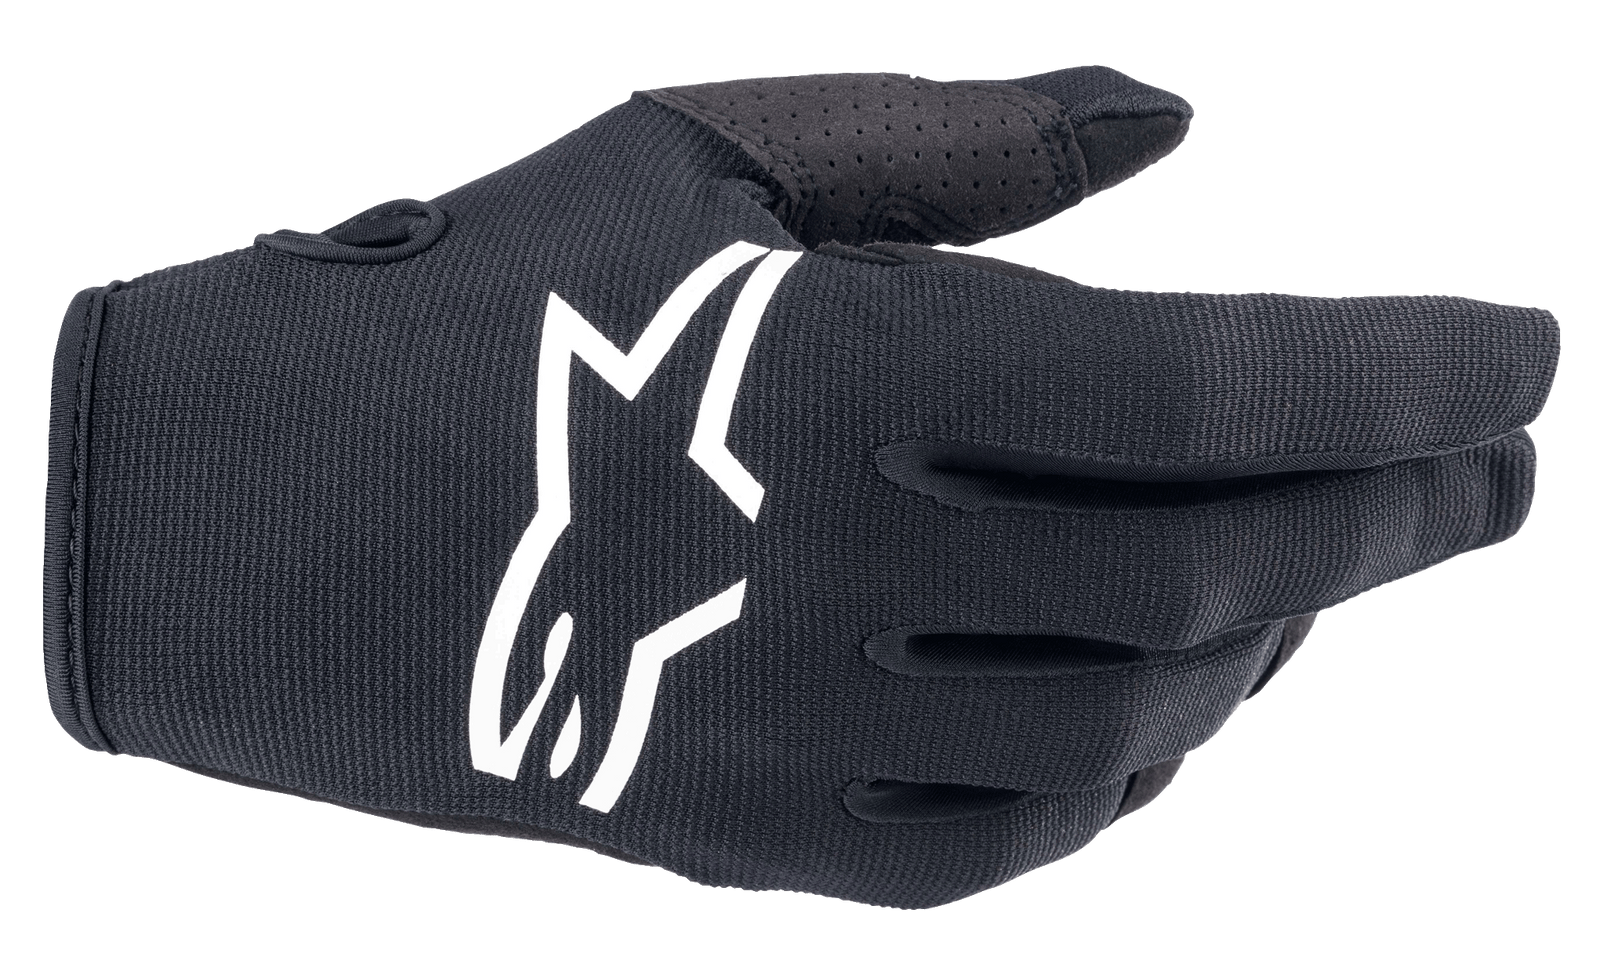 Alps Gloves